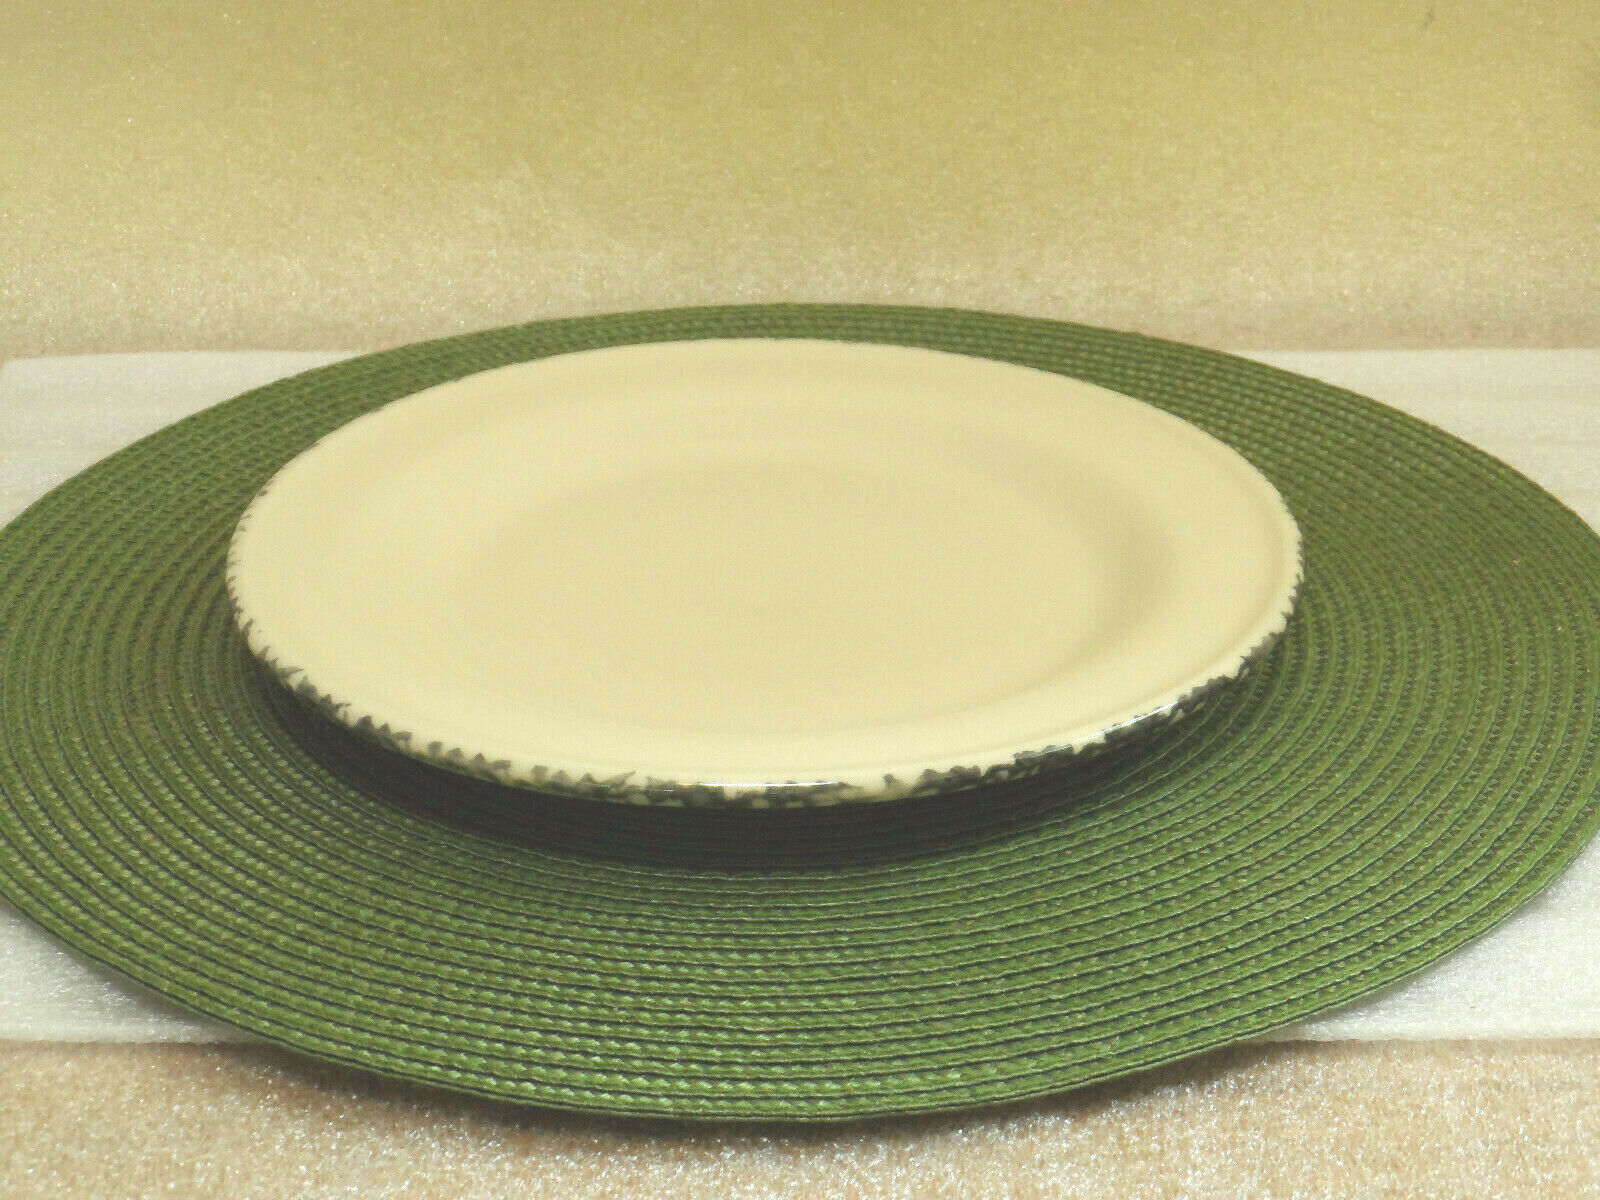 Henn Pottery Rosewille 9” Plate Green Spongeware Rim Vintage